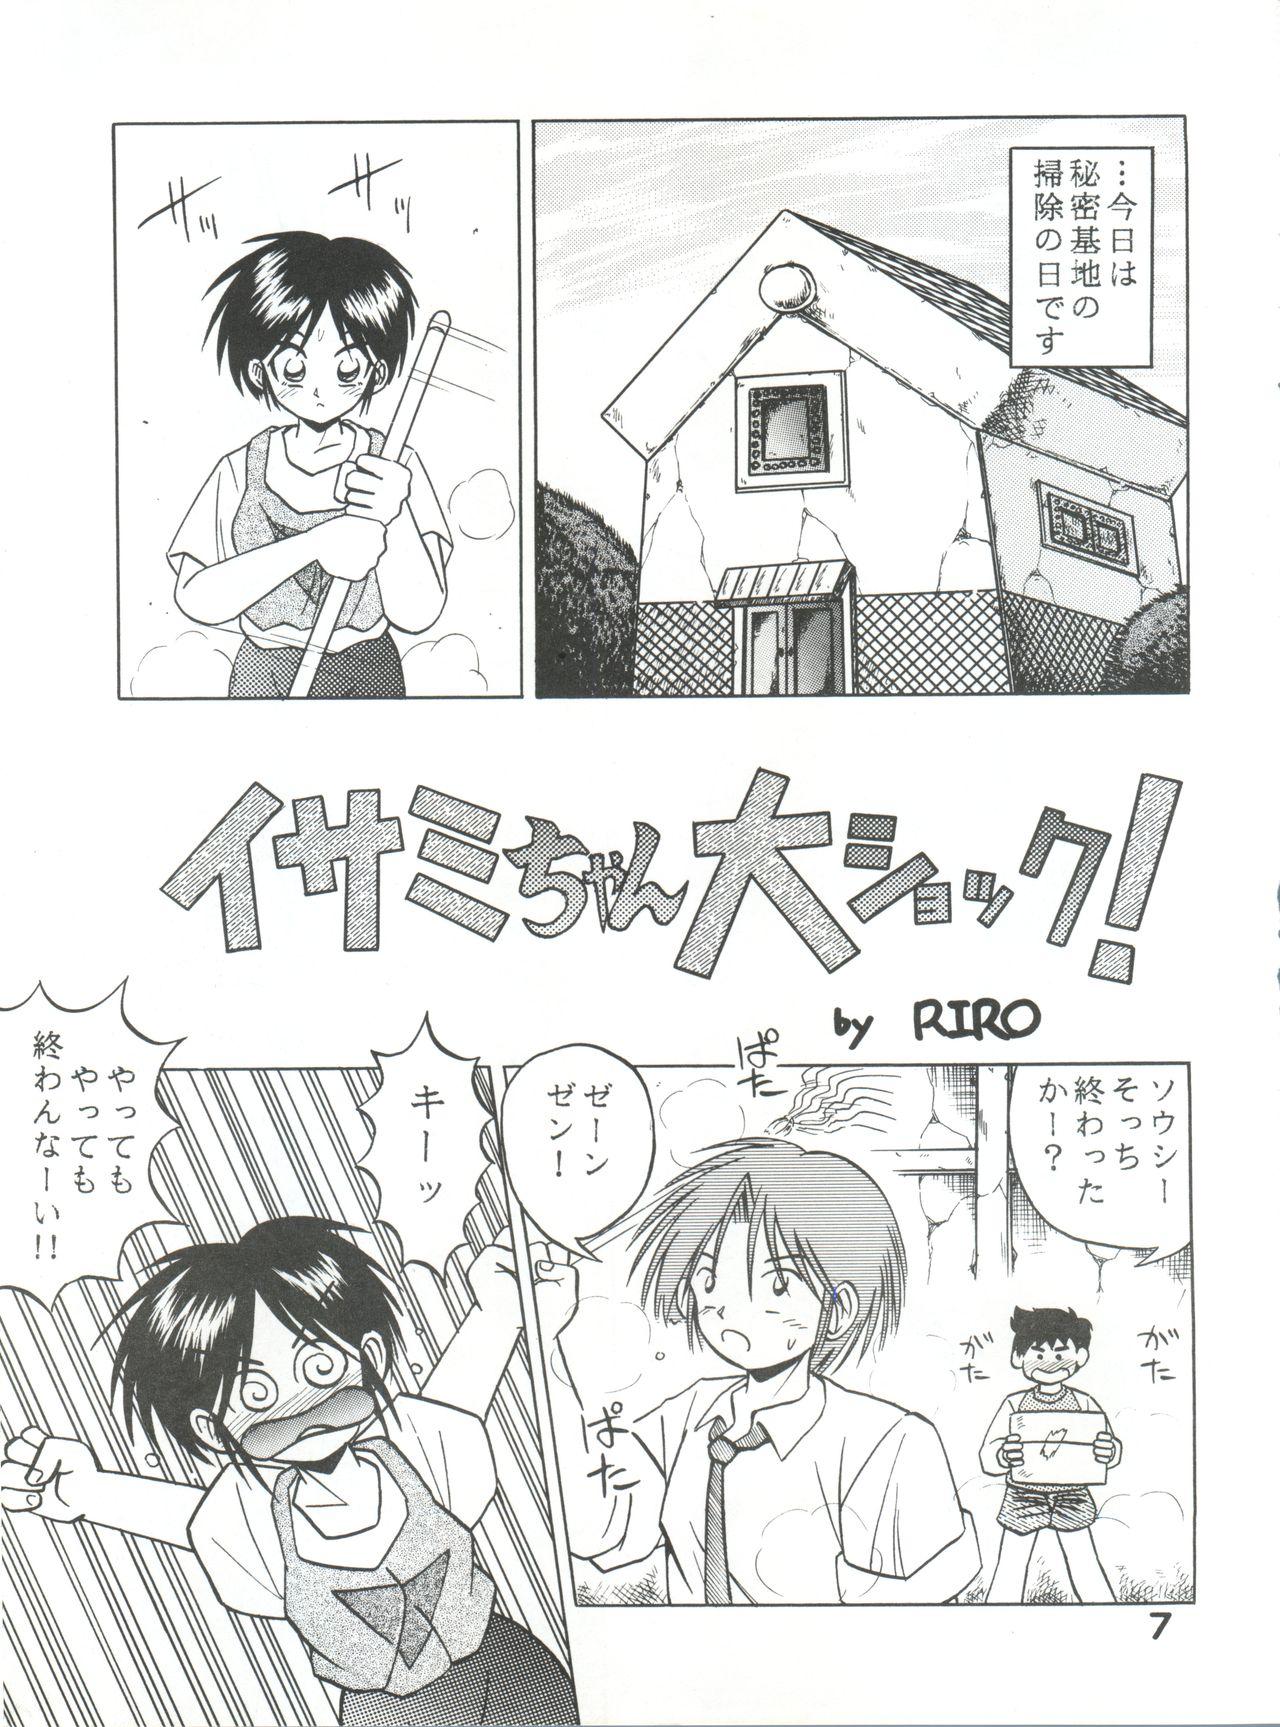 Small Tits Gonen Sankumi Shinsengumi! - Tobe isami Femboy - Page 6